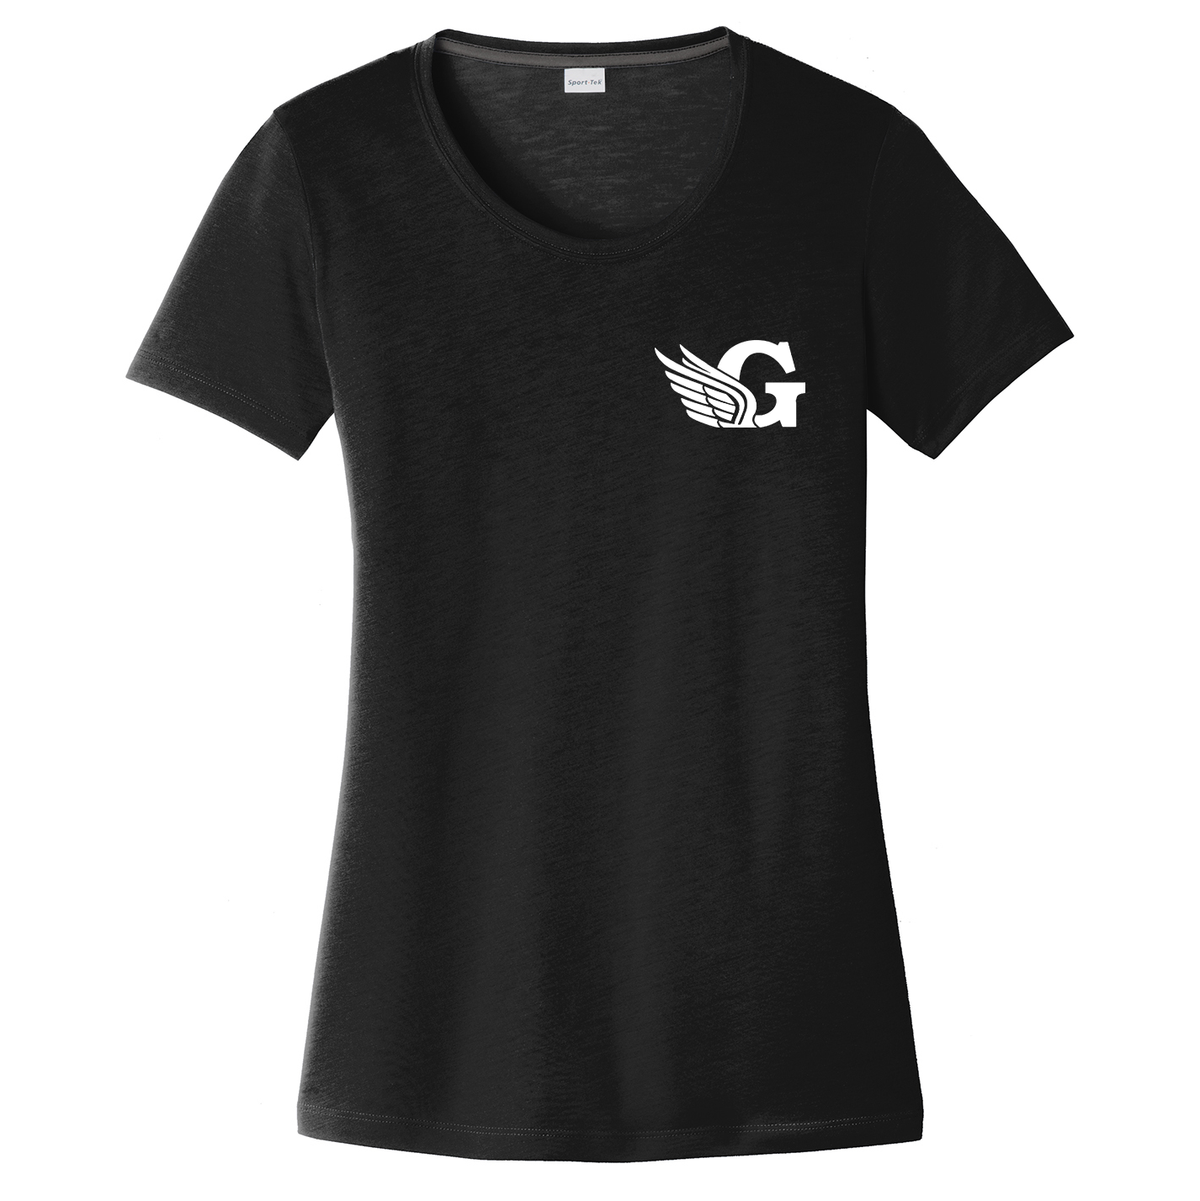 Greenwich HS Track Women's CottonTouch Performance T-Shirt